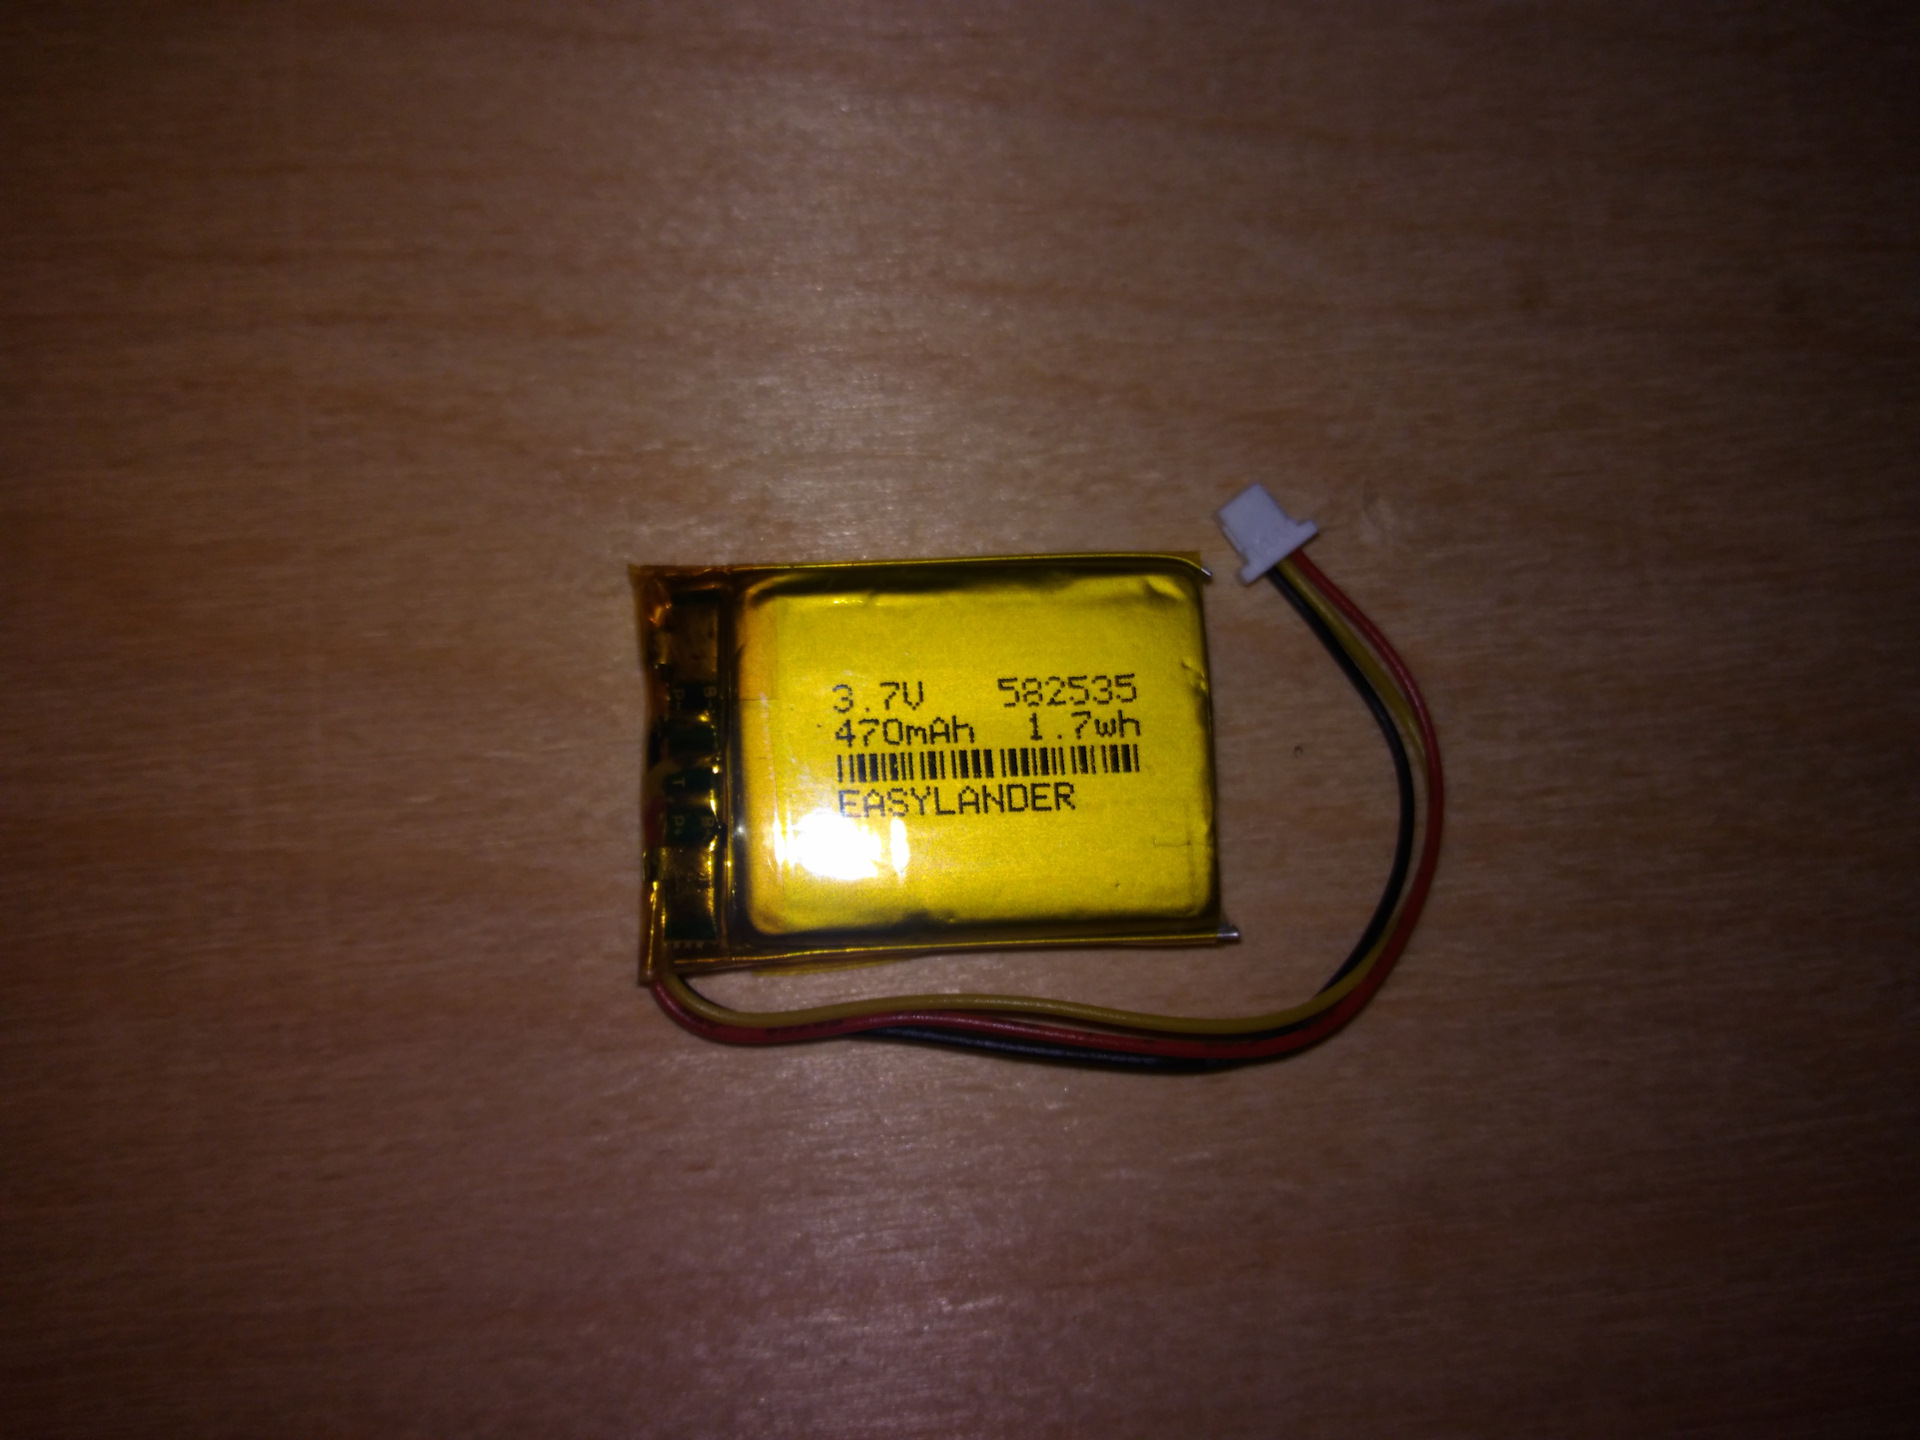 Аккумулятор для видеорегистратора Мио 508. Аккумулятор для видеорегистратора Мистери 620. Аккумулятор для видеорегистратора Мио 528. Аккумулятор 582535.